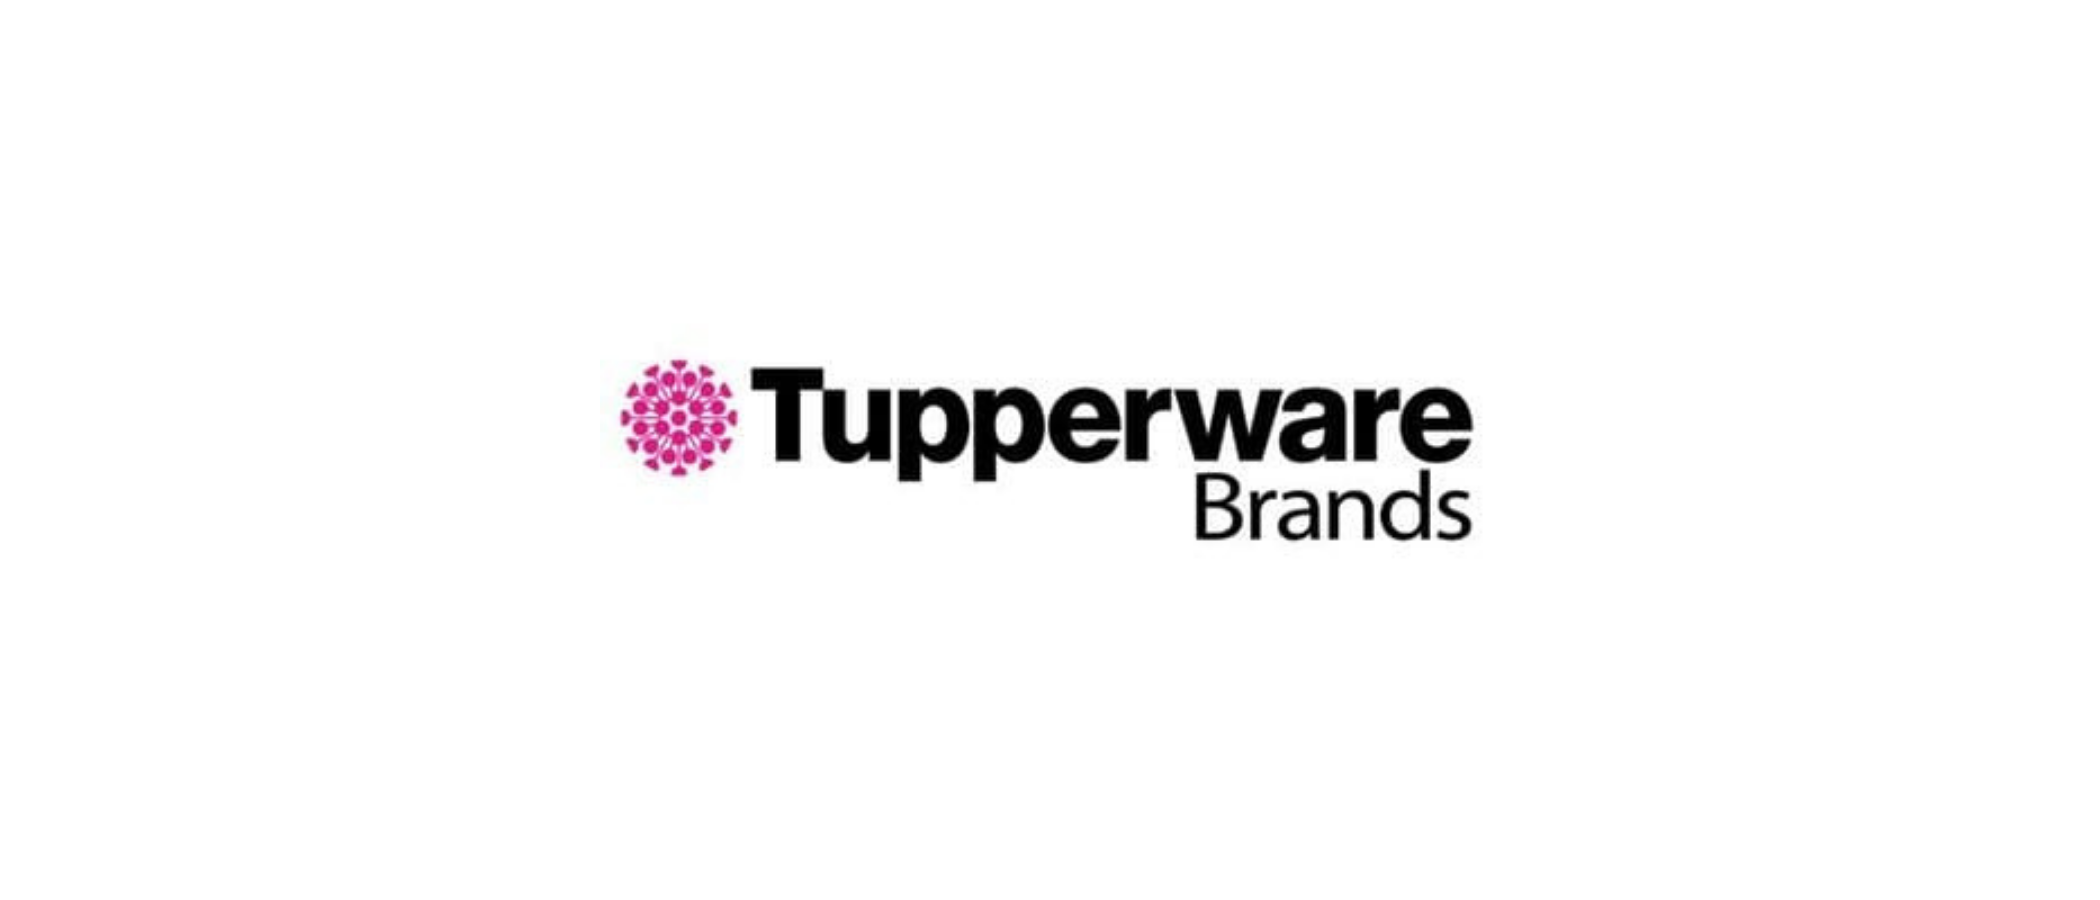 Sales of Tupperware 'phenomenal' despite pandemic, Fargo sales group reports